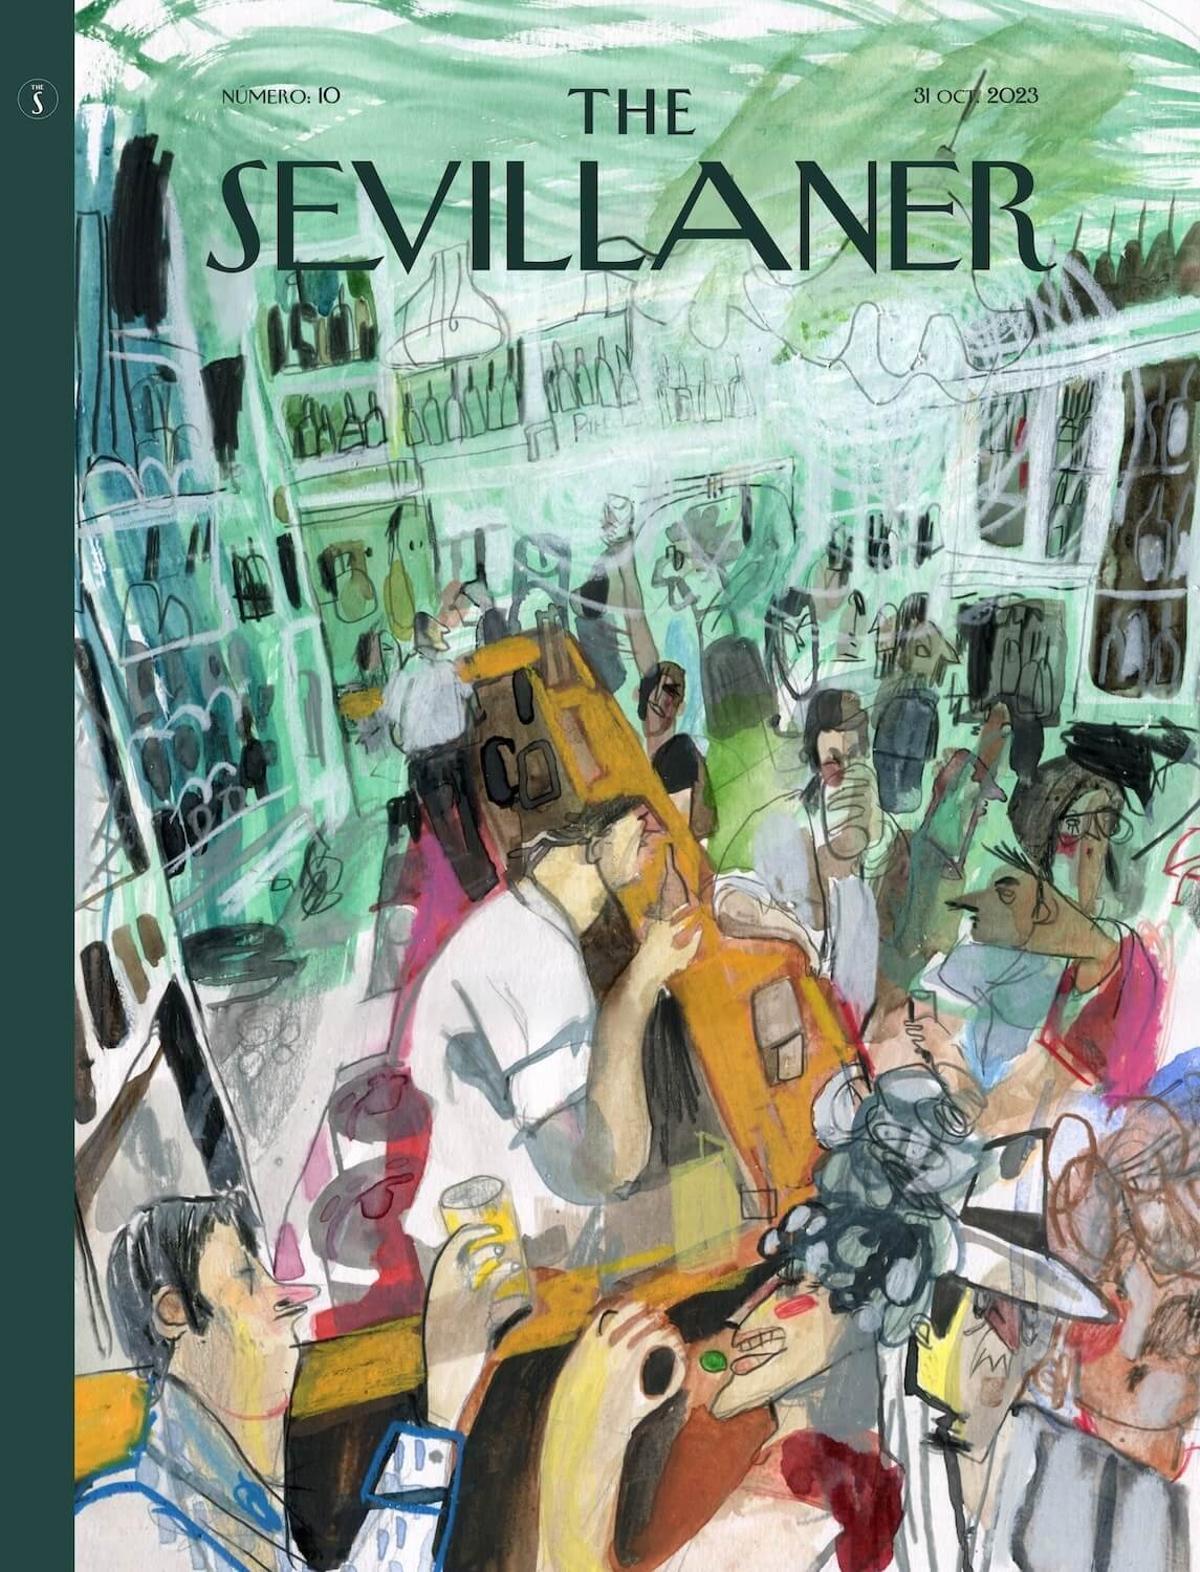 La décima portada de 'The Sevillaner' de la ilustradora, Inma Serrano.